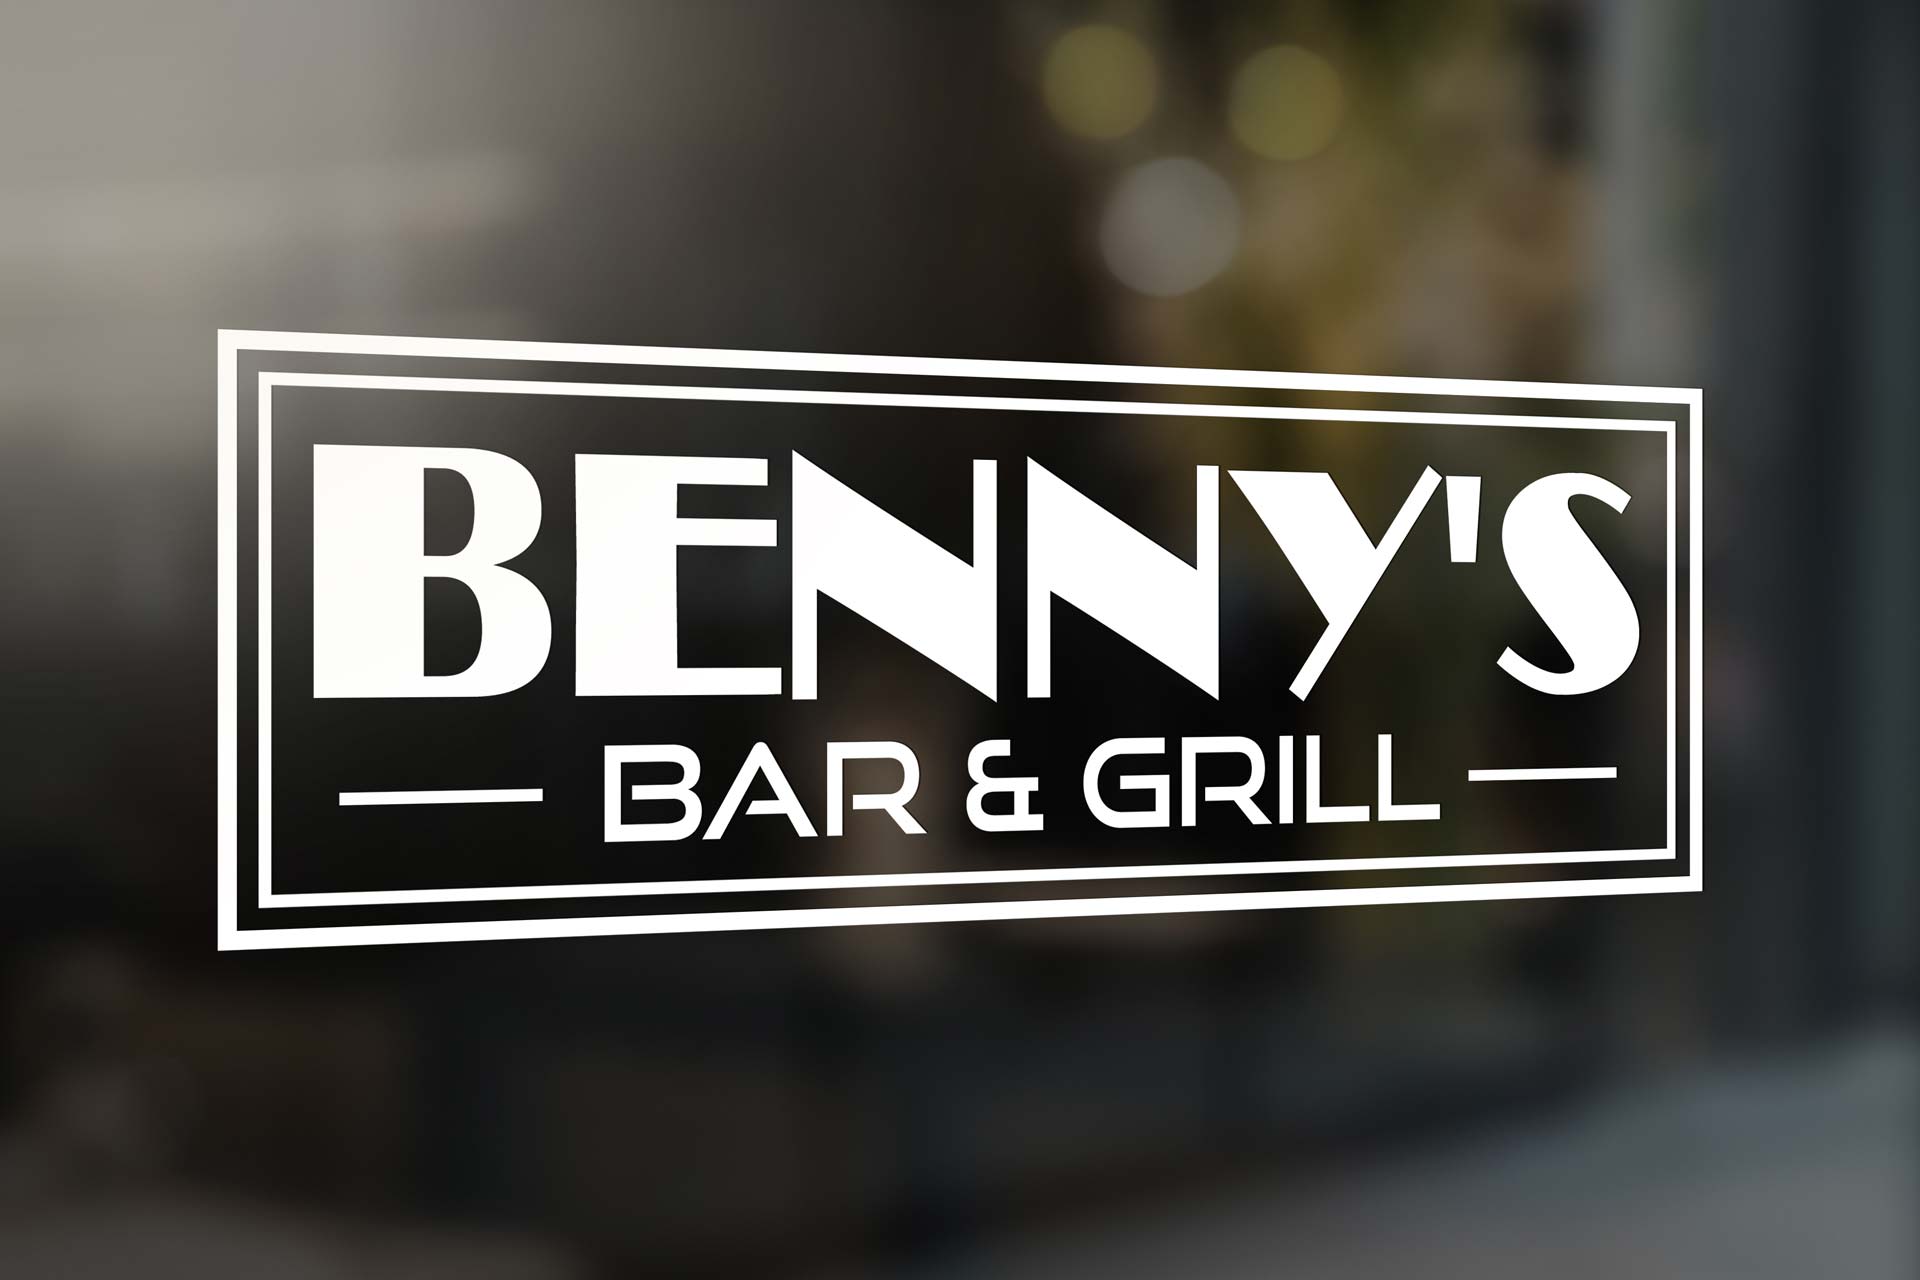 Benny's Bar & Grill Logo - David Gorham Design - Graphic Designer in